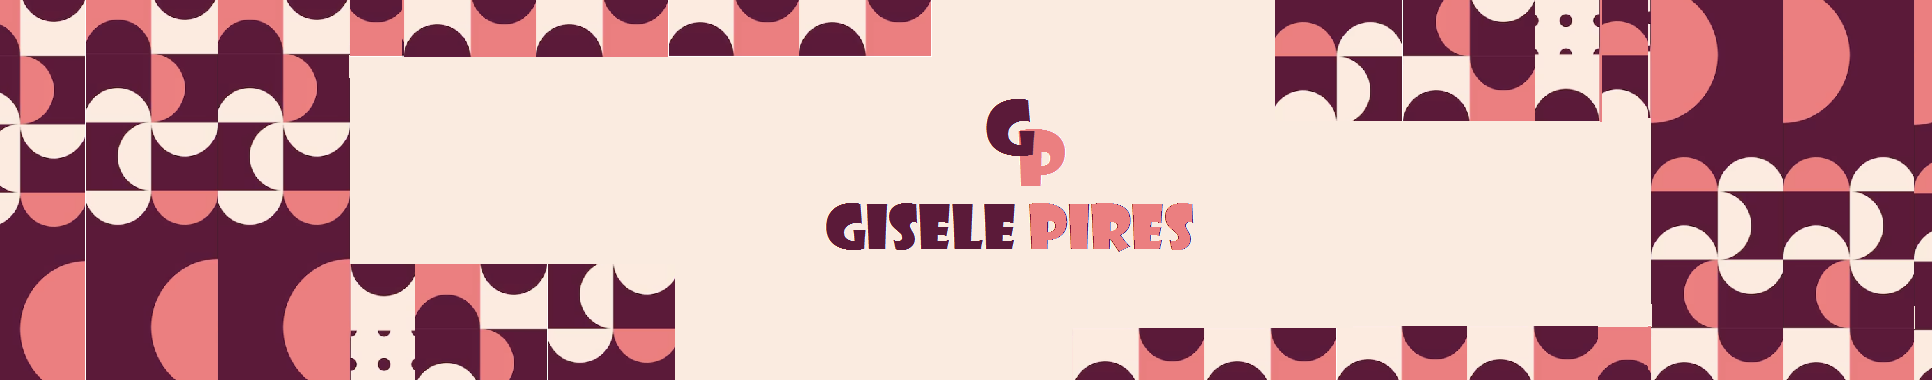 Gisele Pires's profile banner